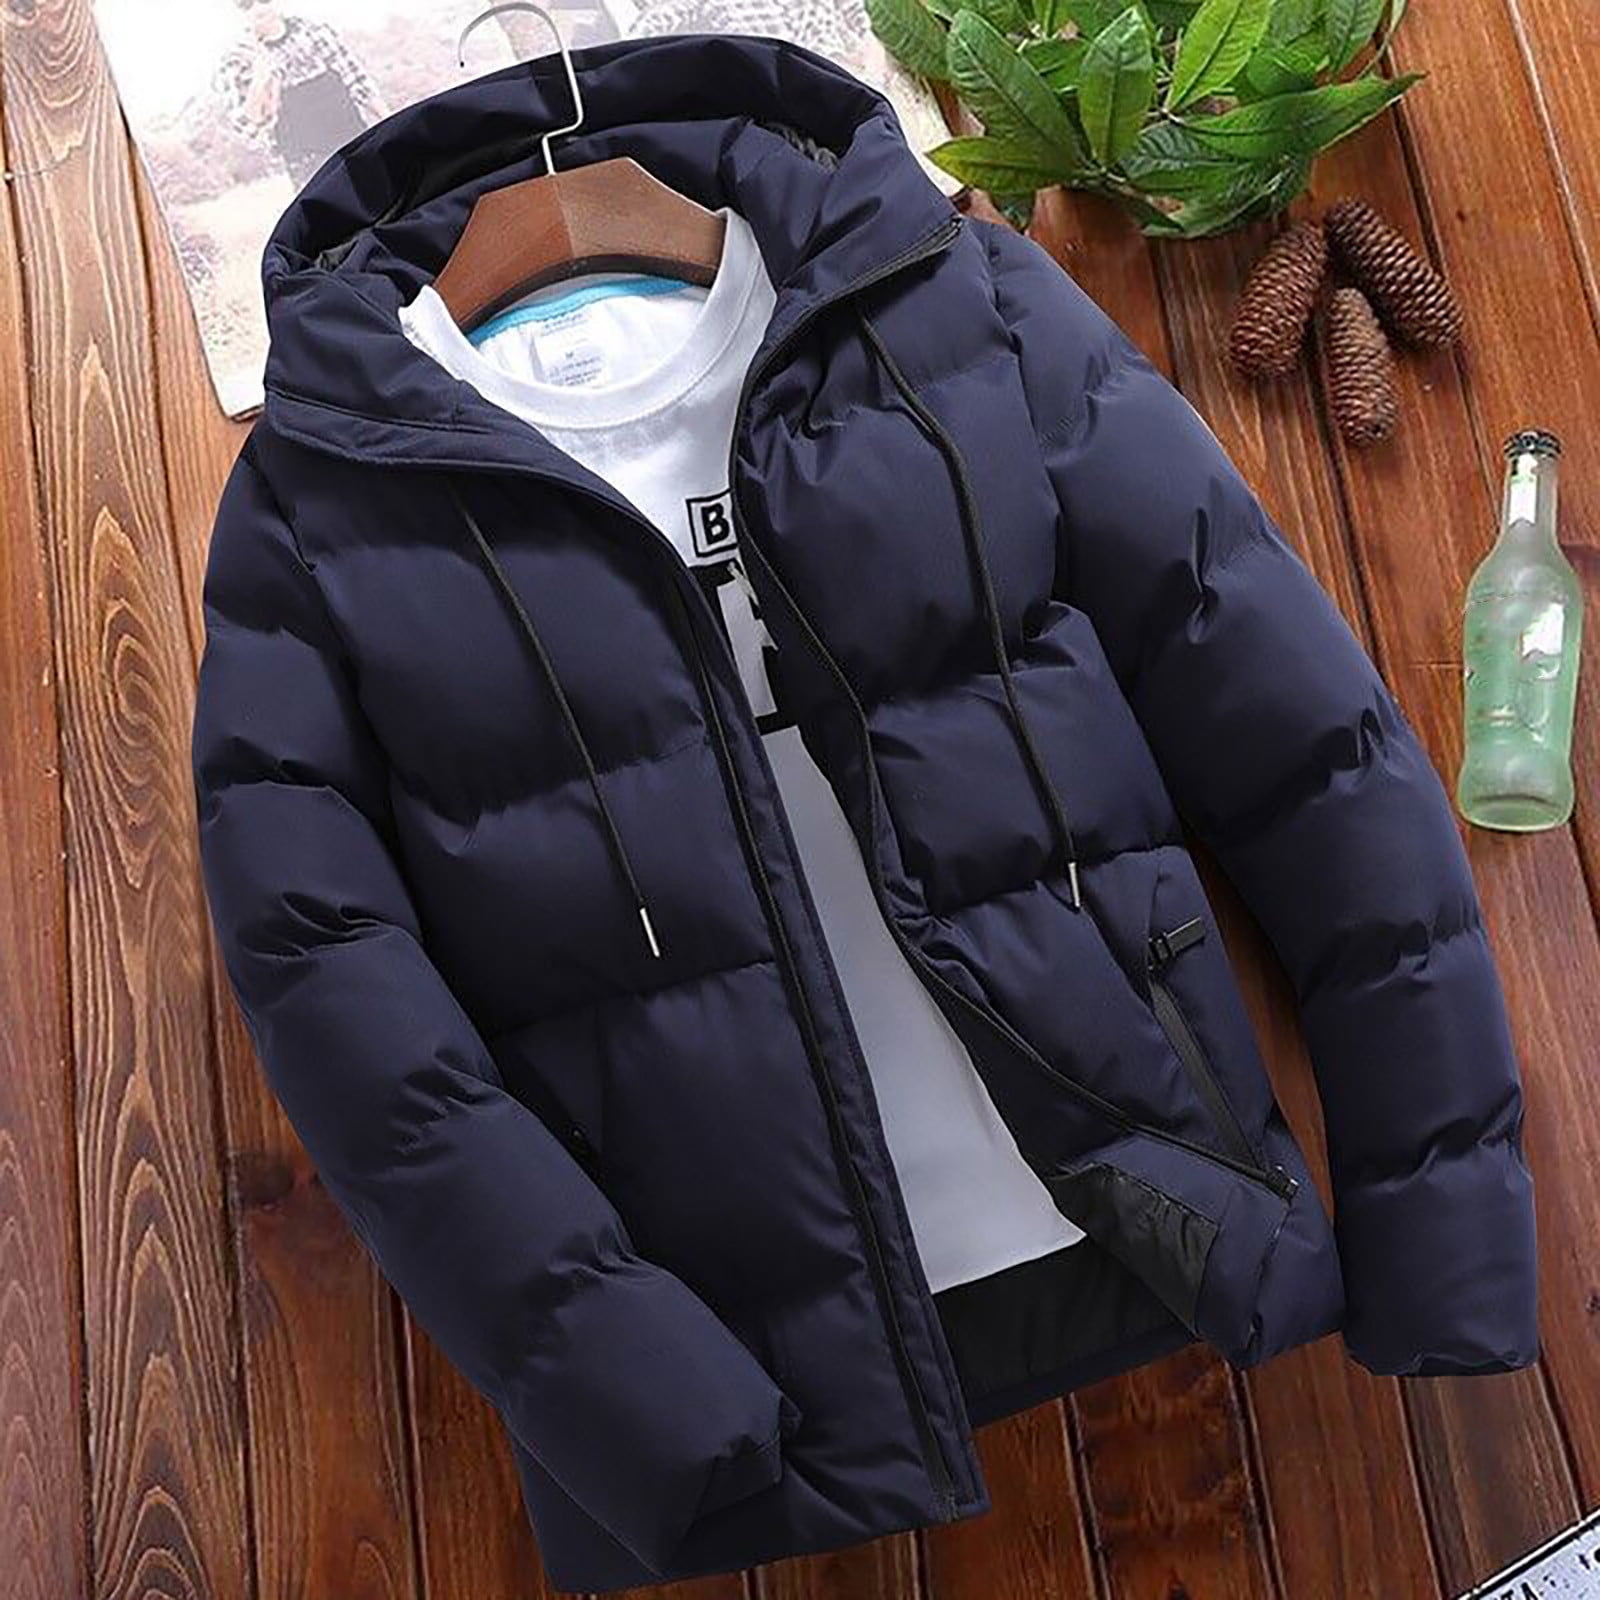 Dtydtpe Winter Jackets for Men, Men Autumn and Winter Solid Zipper